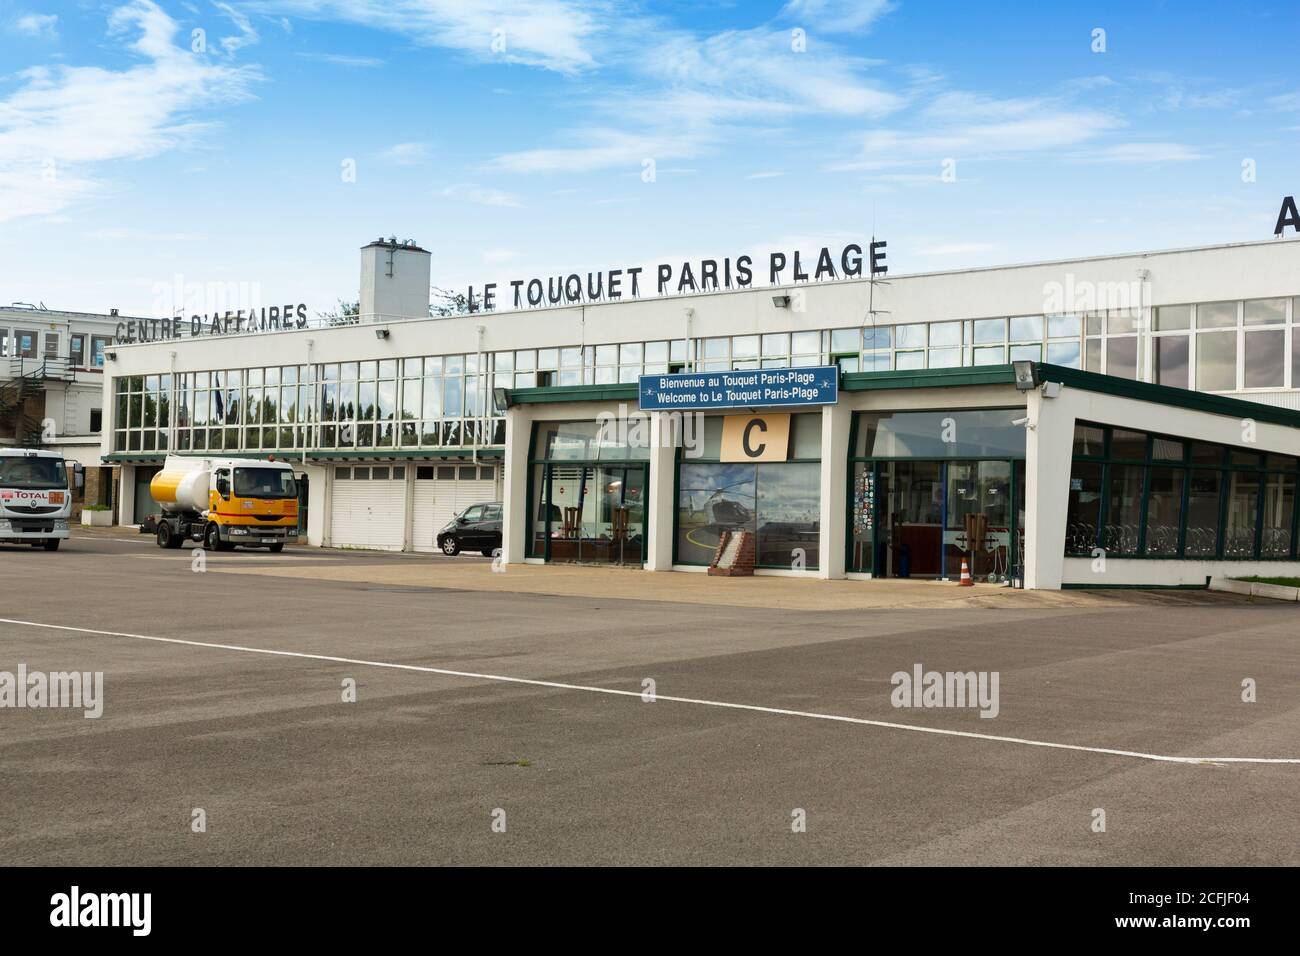 Aeroporto le Touquet-Paris-Plage Foto Stock